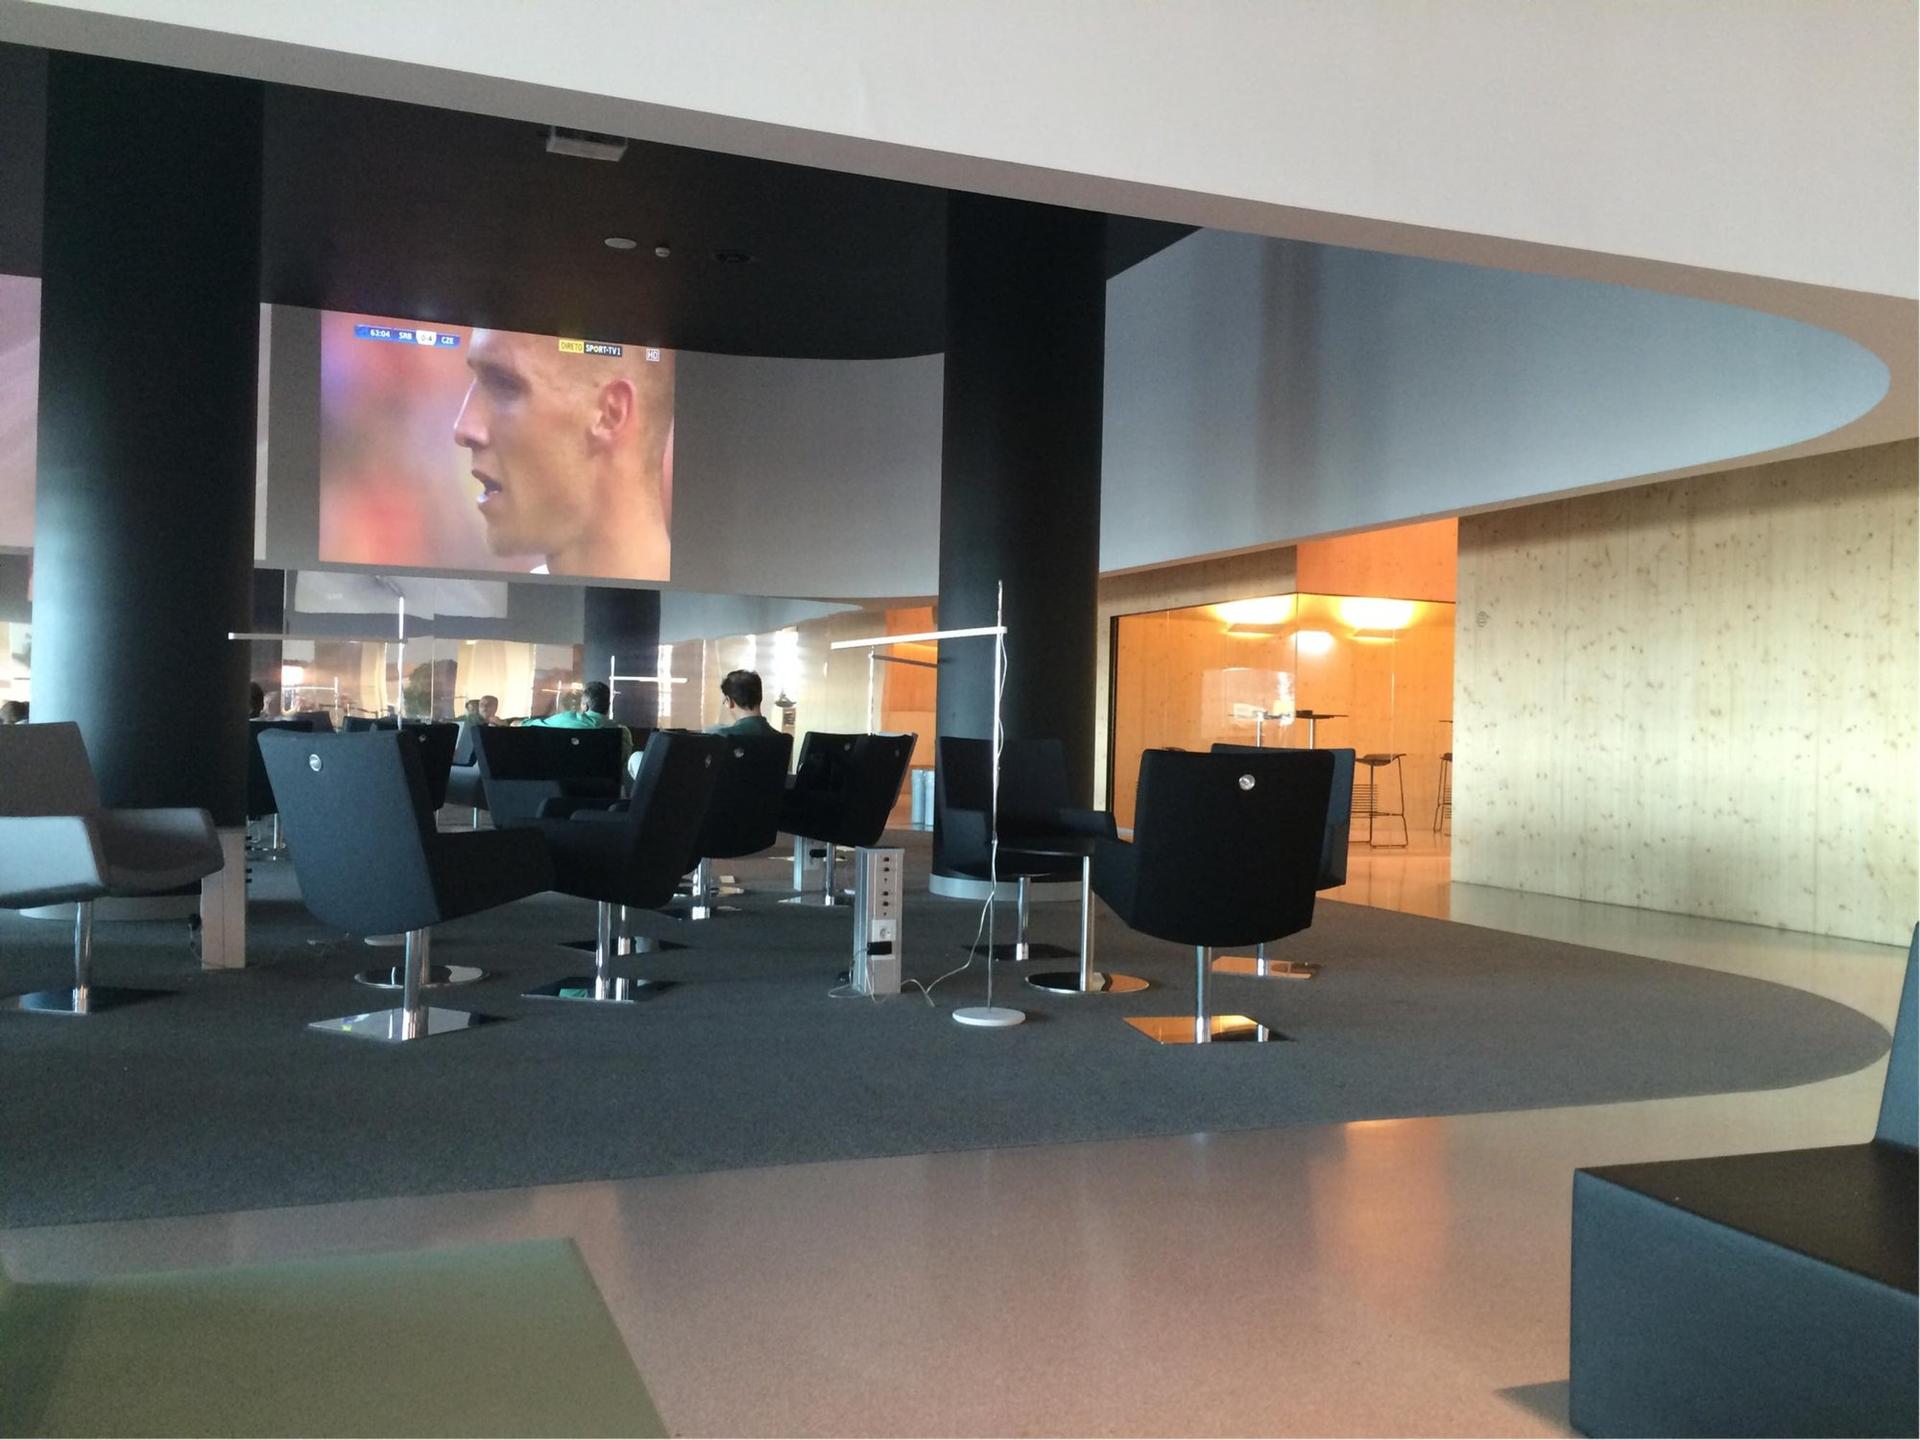 ANA Airport Lounge image 7 of 49